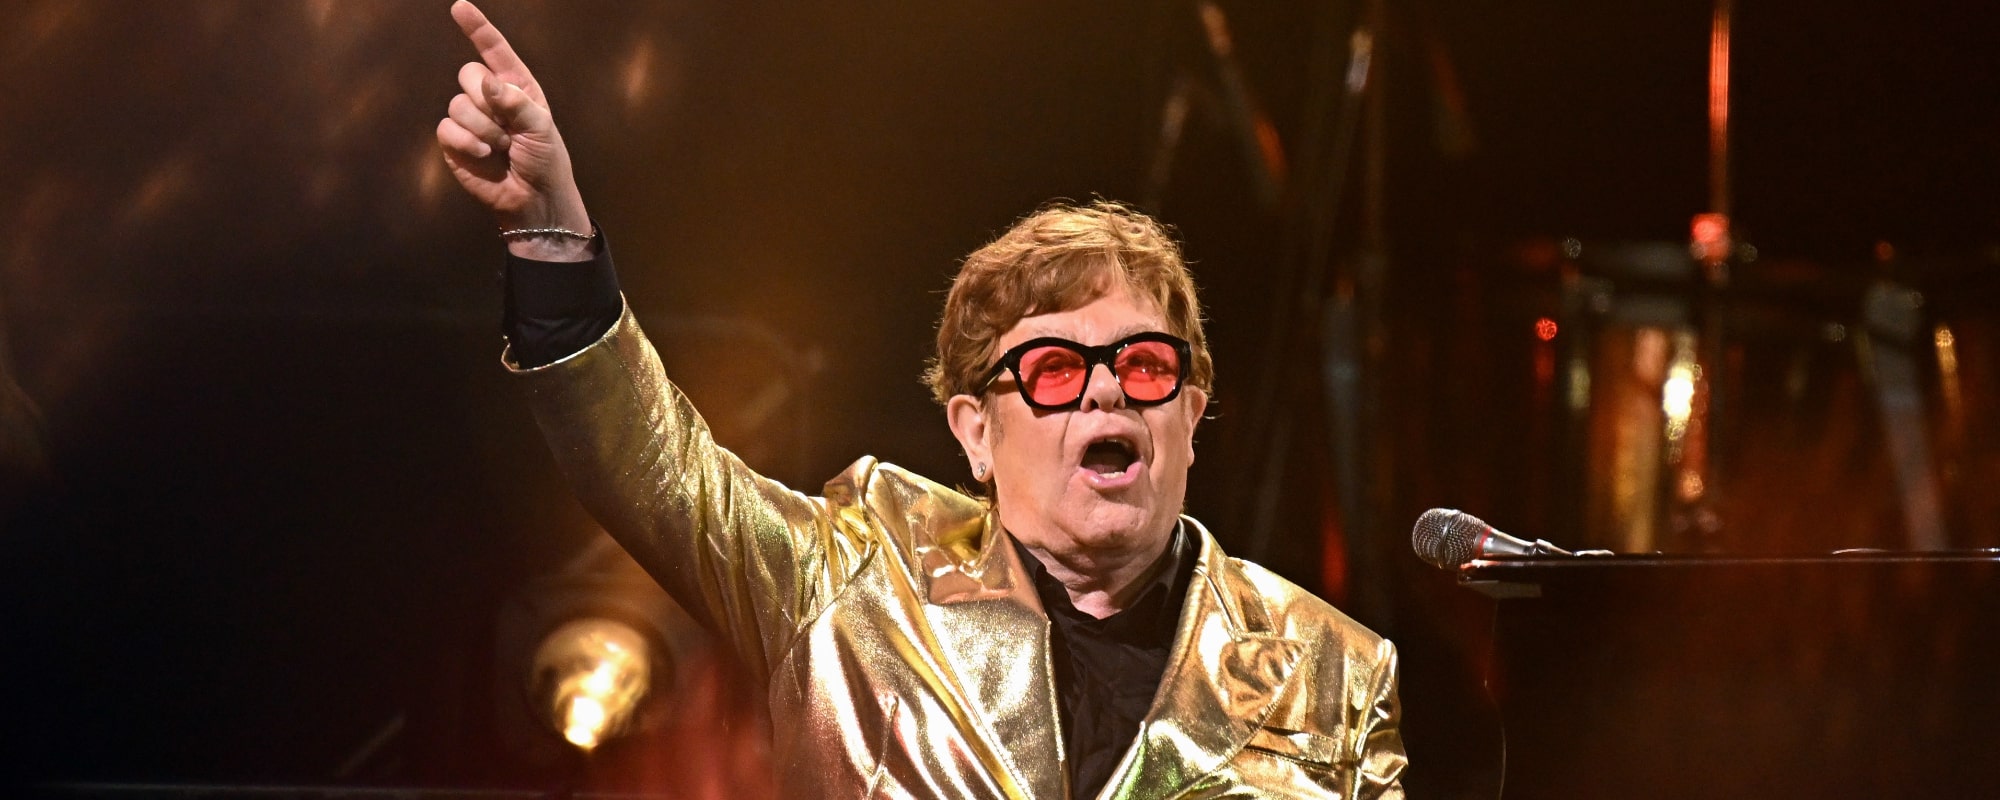 Elton John Celebrates “Rocket Man” Reaching 1 Billion Streams on Spotify